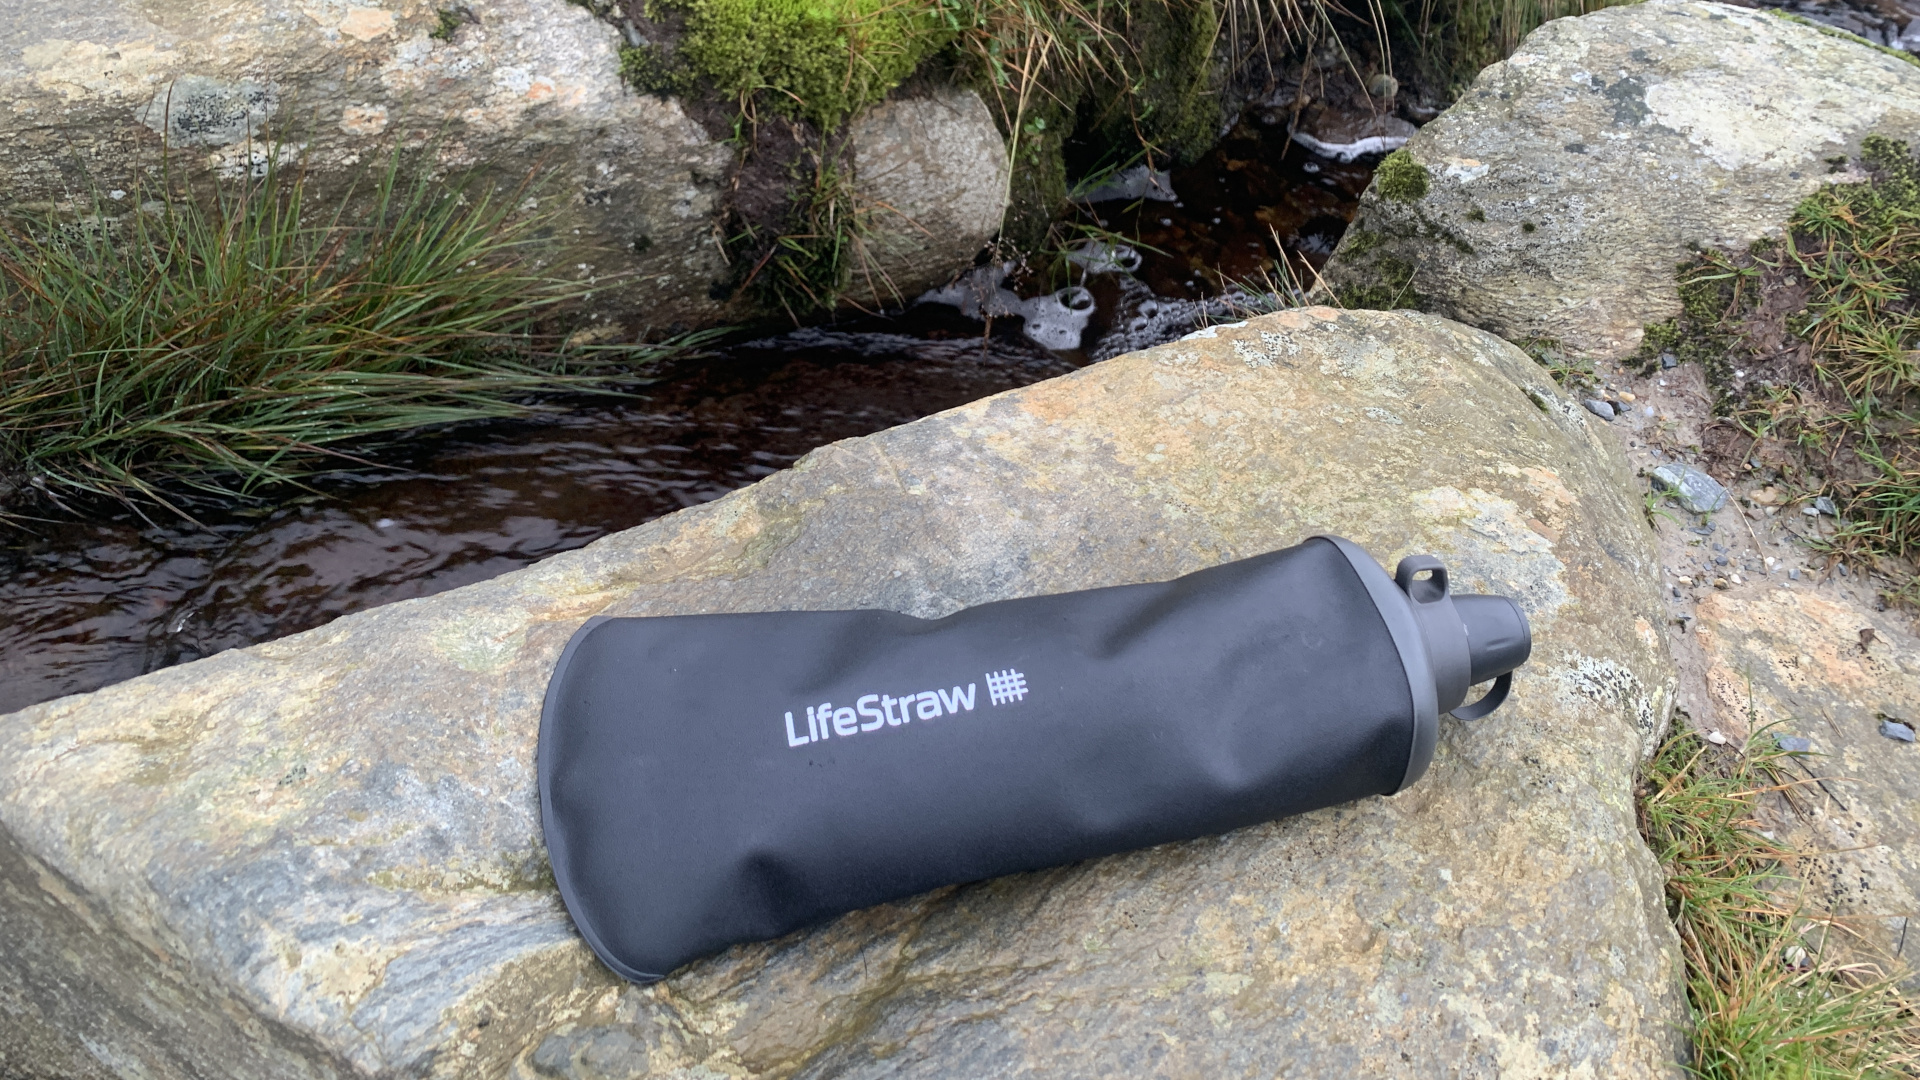 Lifestraw Go Drink Bottles Review - Peak Mountaineering